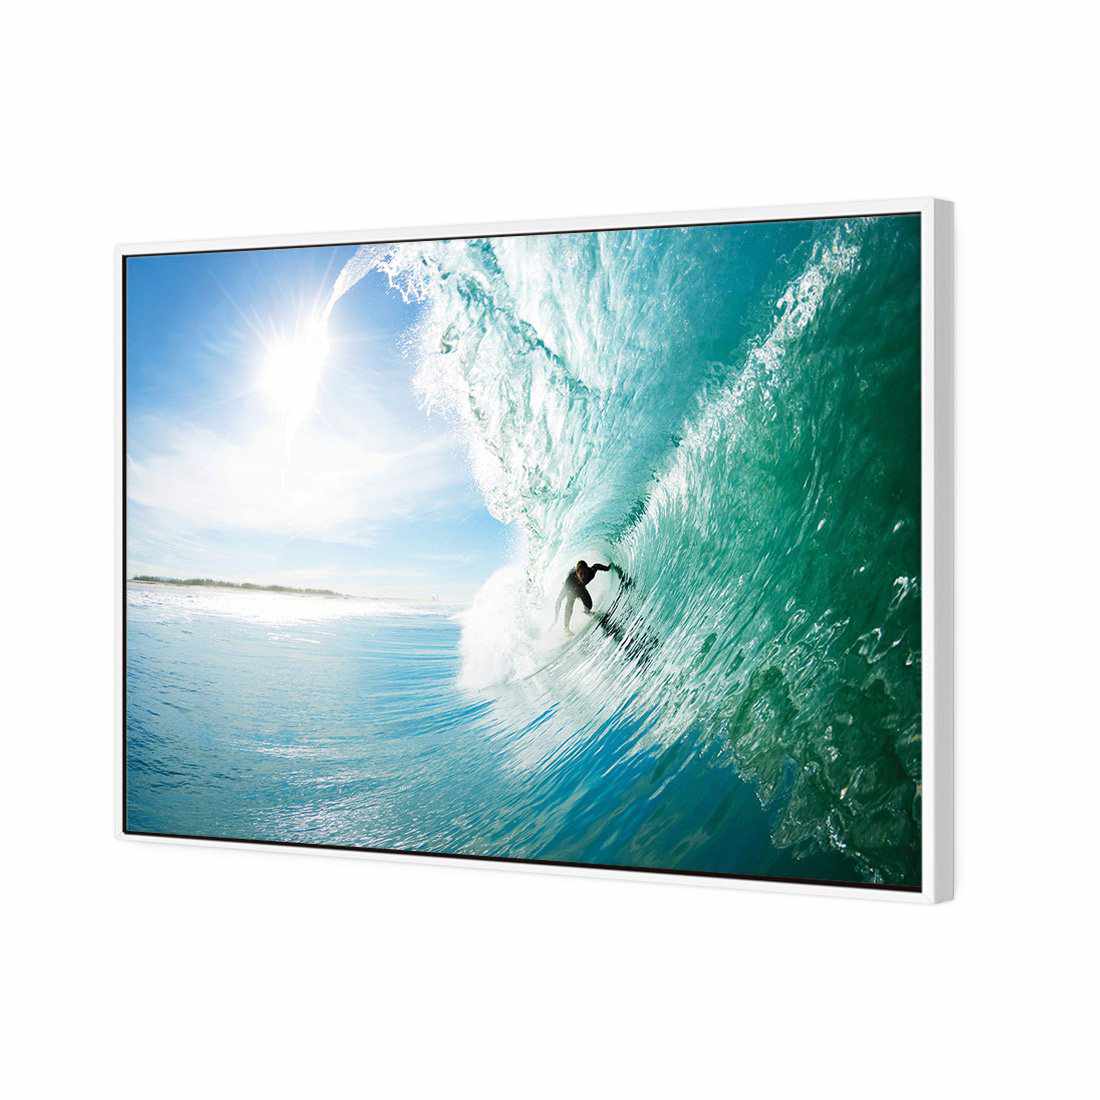 Surfer Under Wave Canvas Art-Canvas-Wall Art Designs-45x30cm-Canvas - White Frame-Wall Art Designs